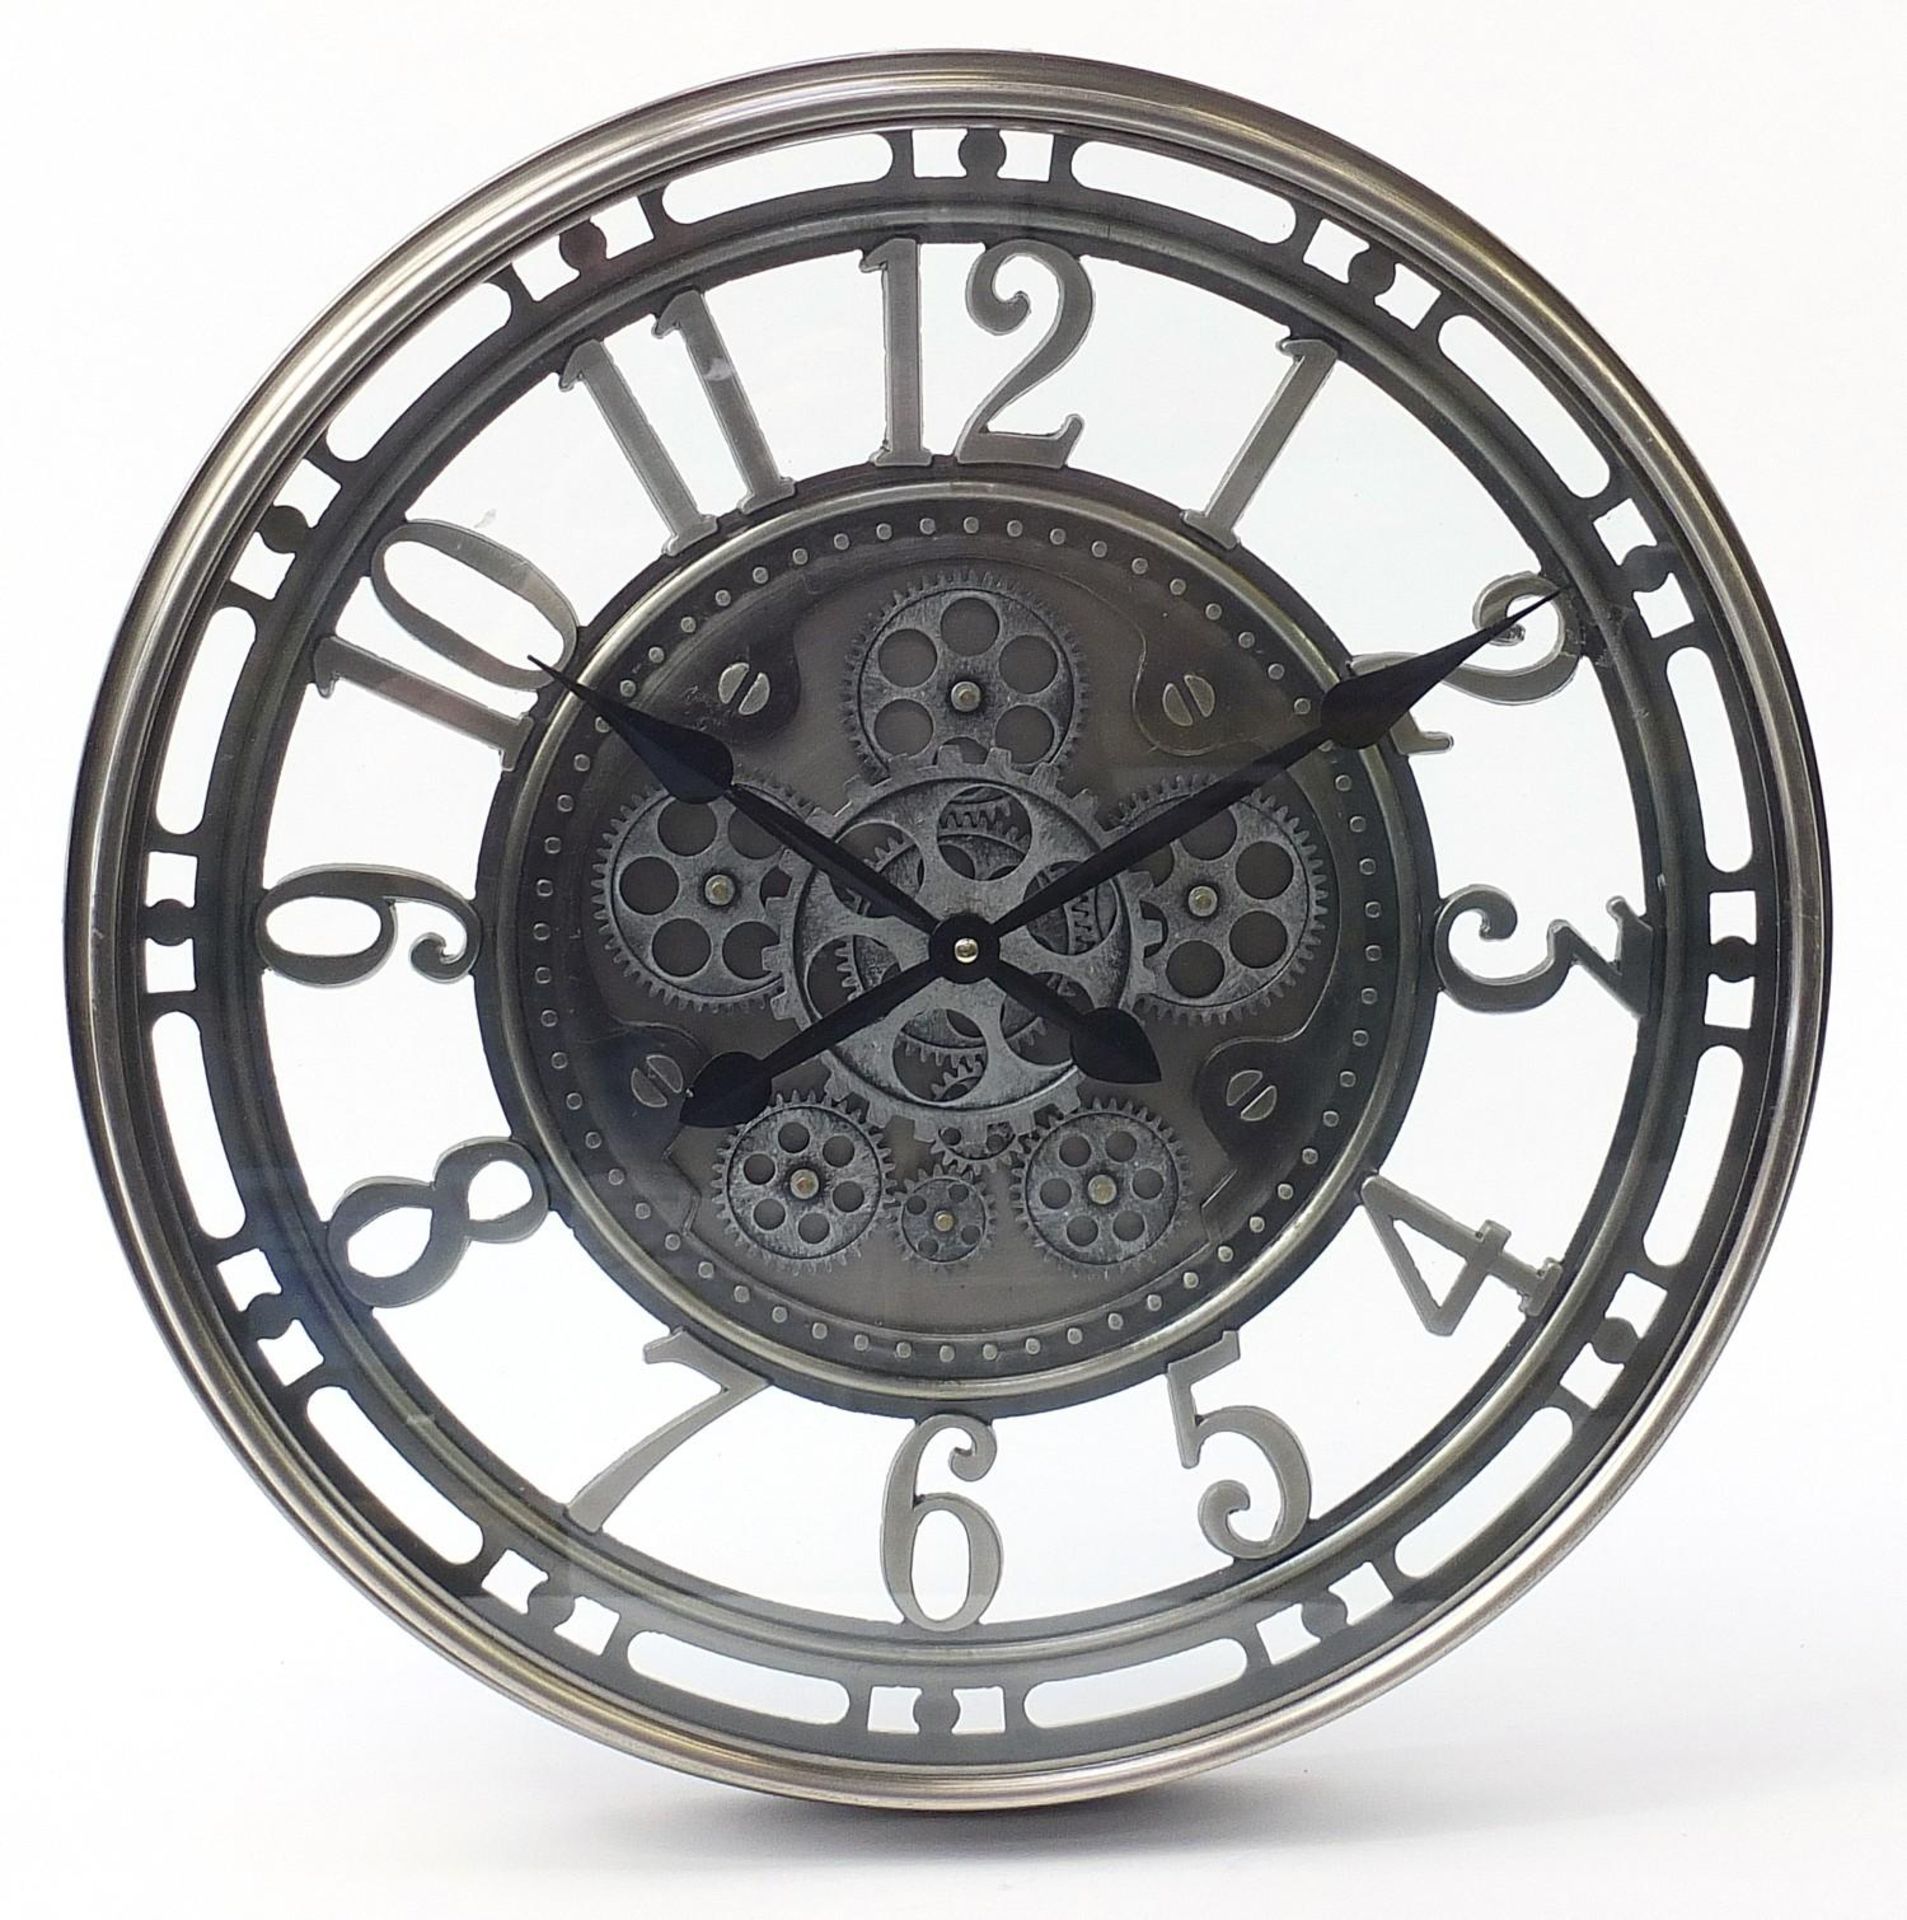 Modernist skeleton design wall clock with Arabic numerals, 52cm in diameter :